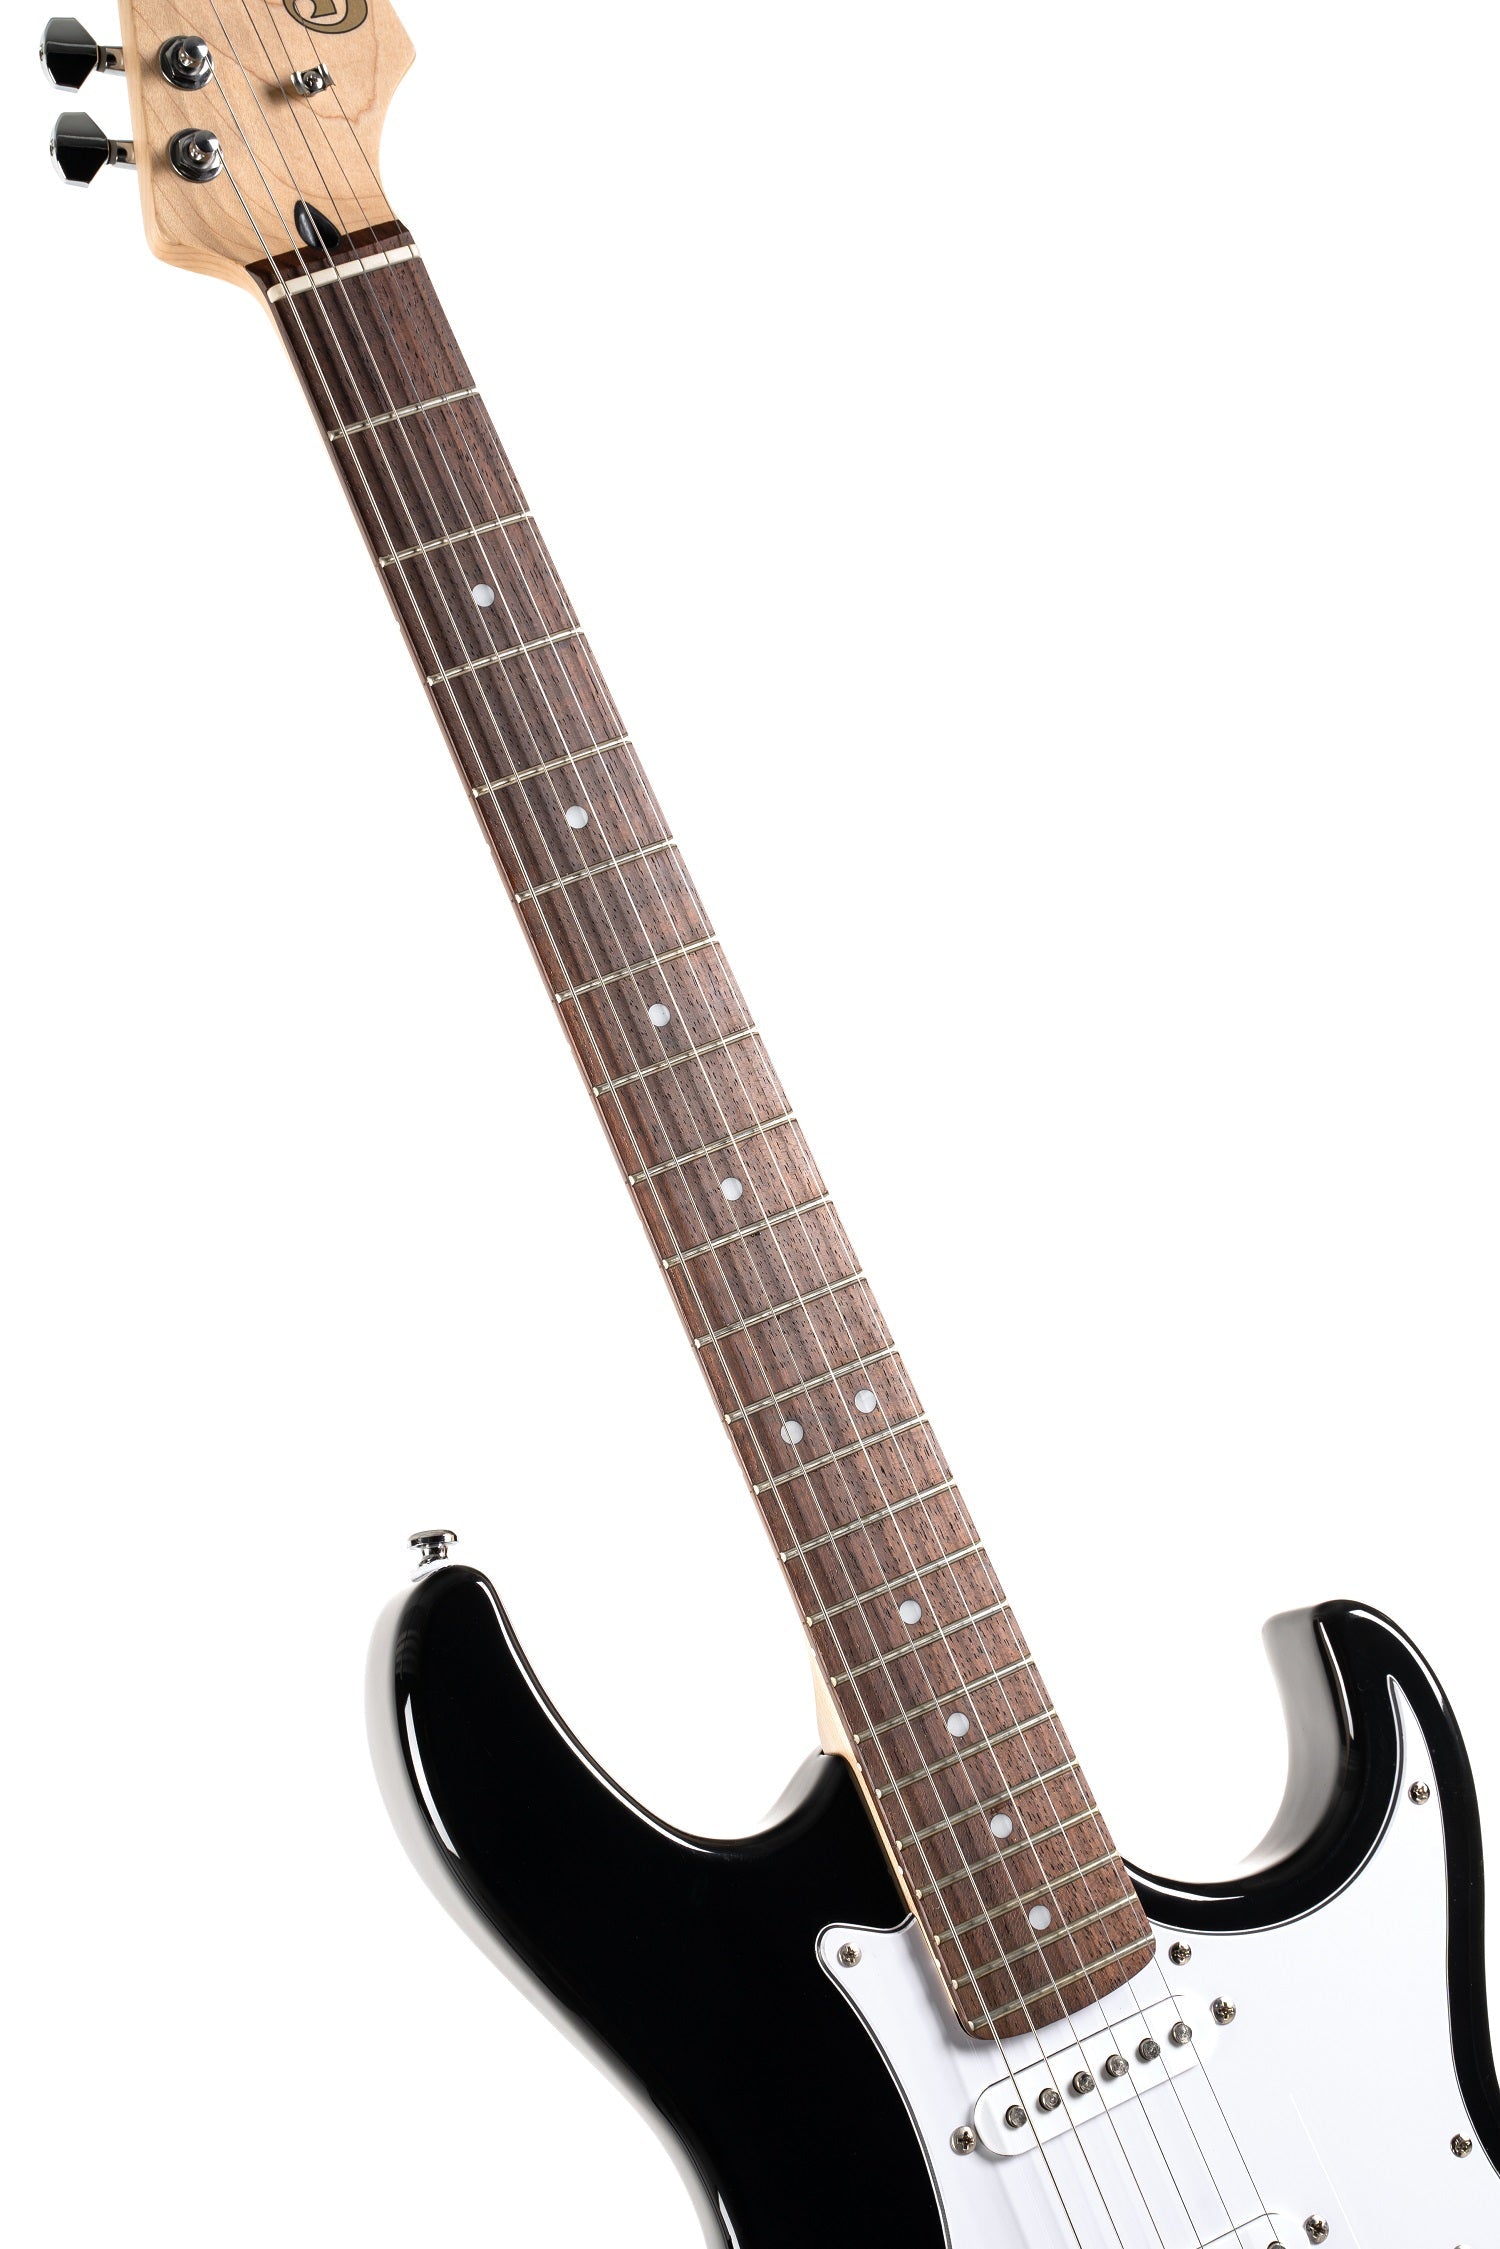 Cort G200 Black, Electric Guitar for sale at Richards Guitars.